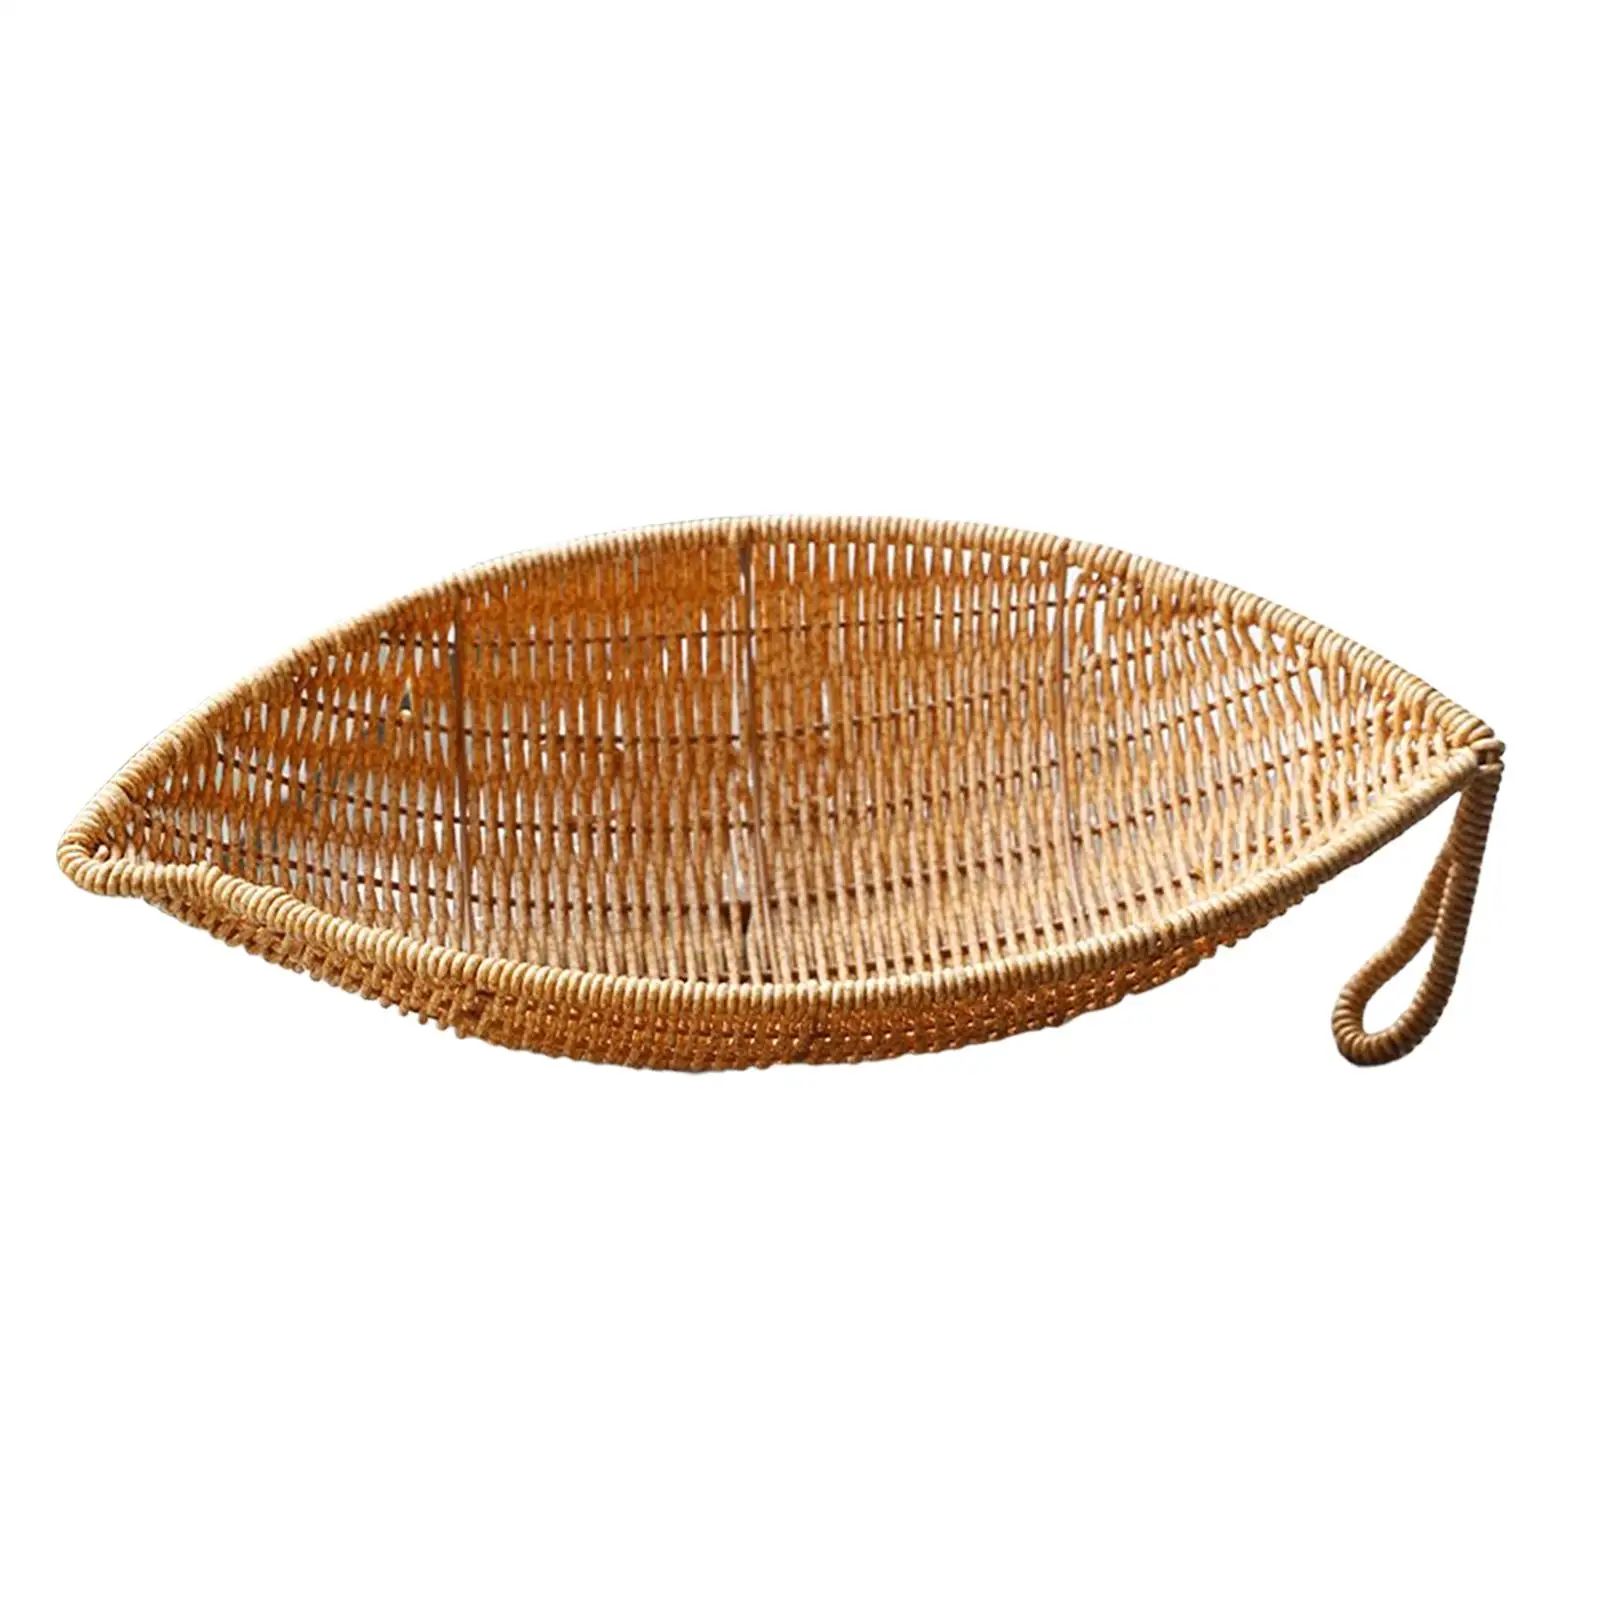 Hand Woven Wicker Vegetable Storage Storage Basket Wicker Basket for Bathroom Bread